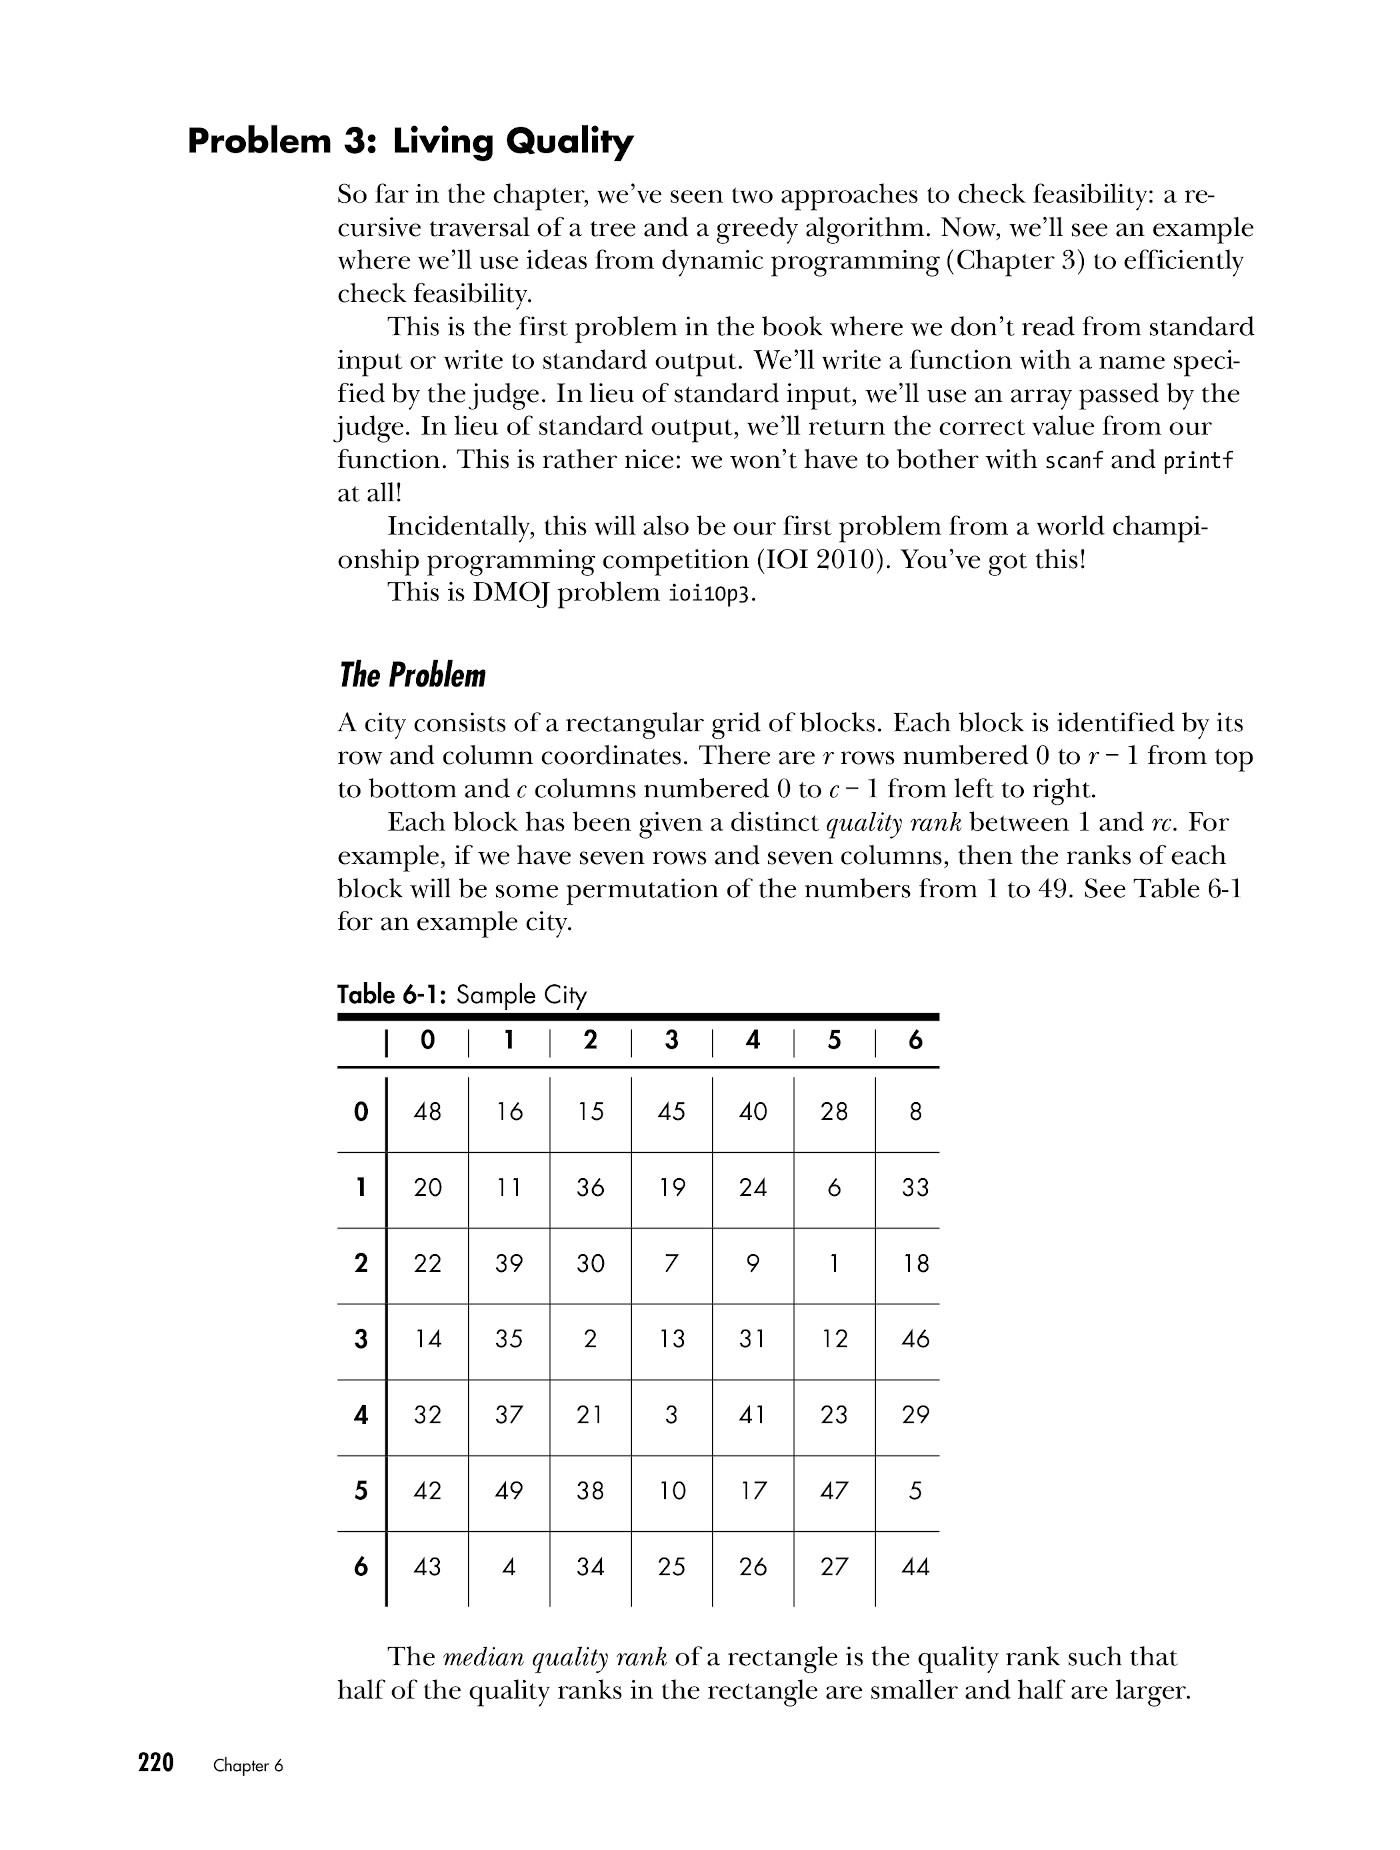 Algorithmic Thinking Page 220